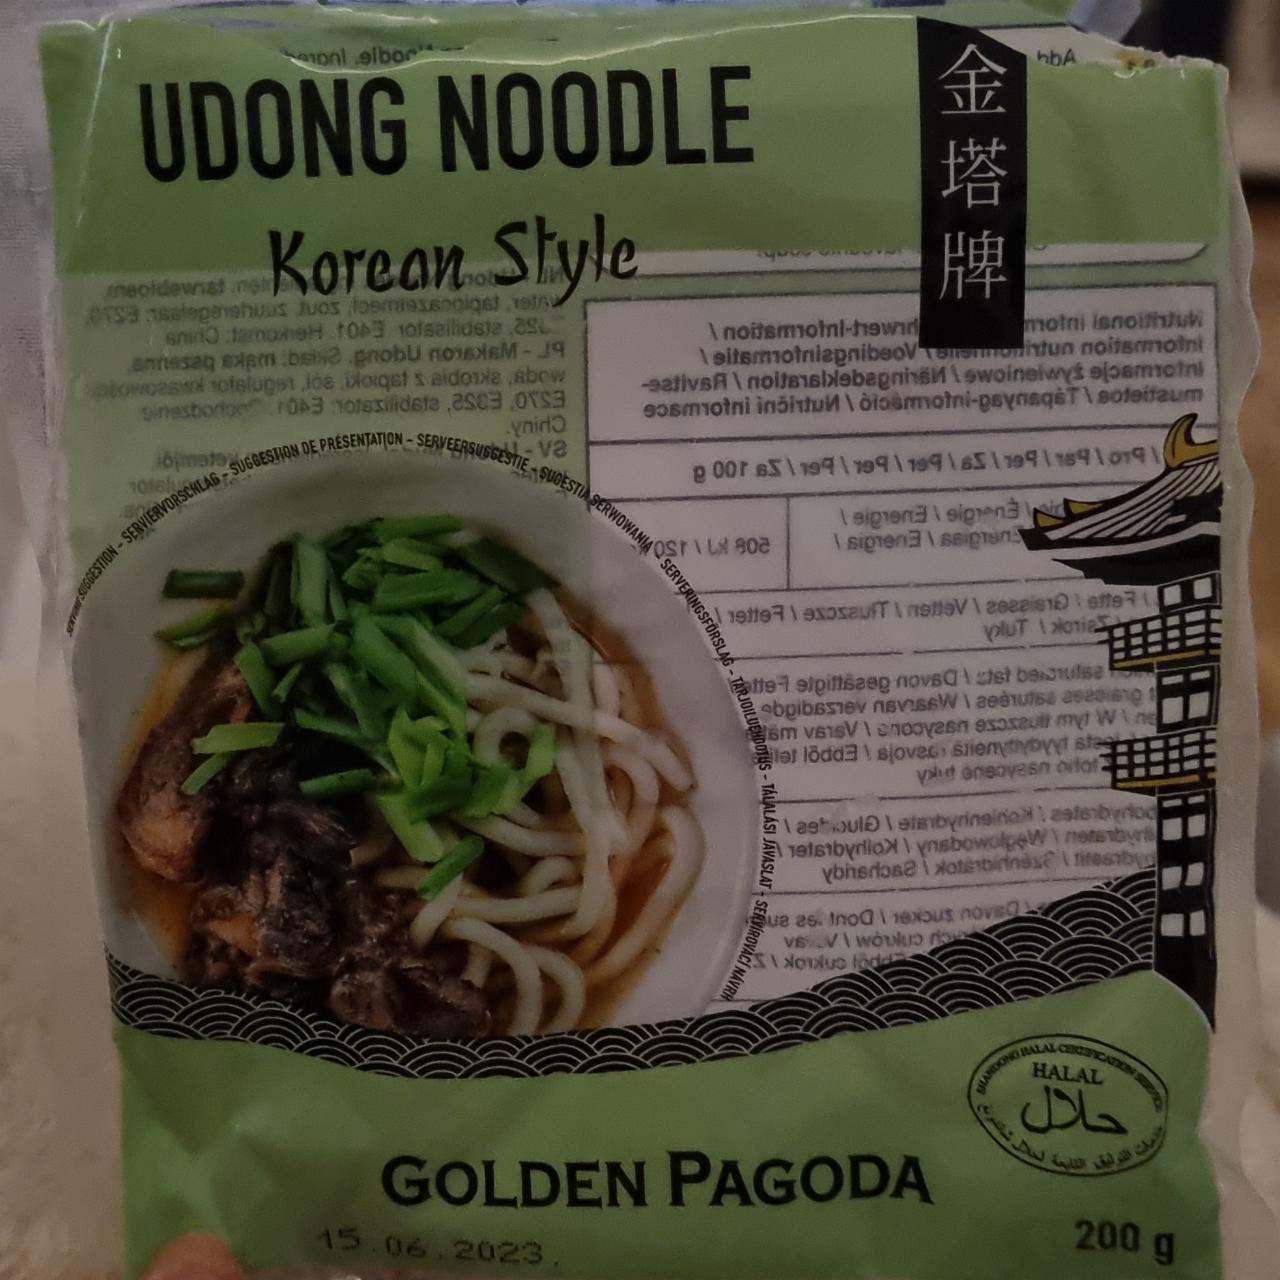 Fotografie - Udong noodle Korean style Golden Pagoda